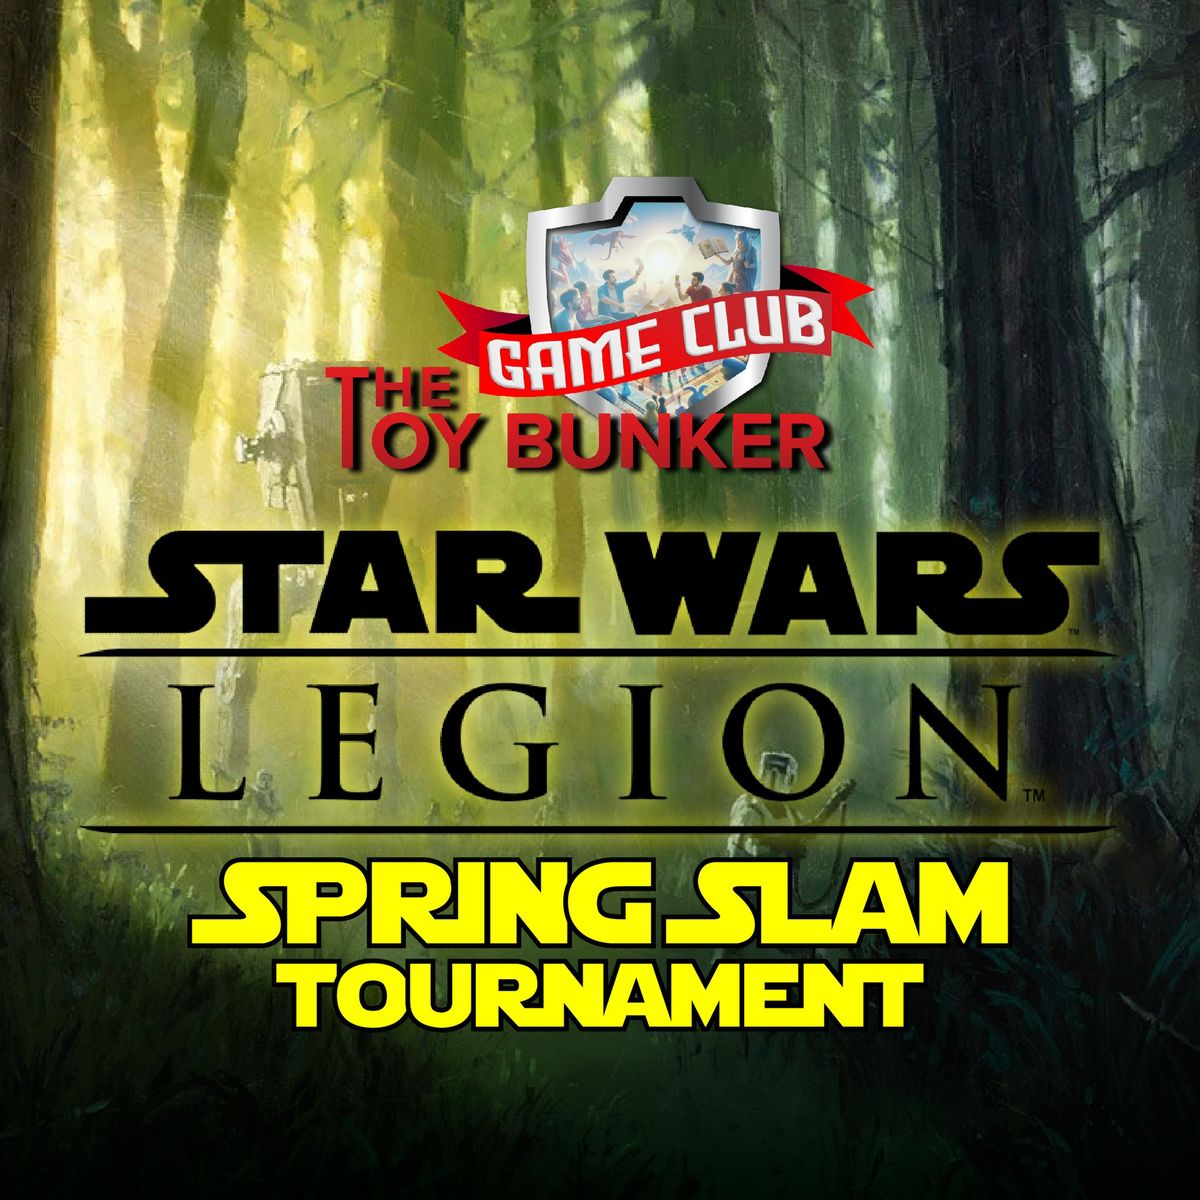 Star Wars Legion Spring Slam Tournament